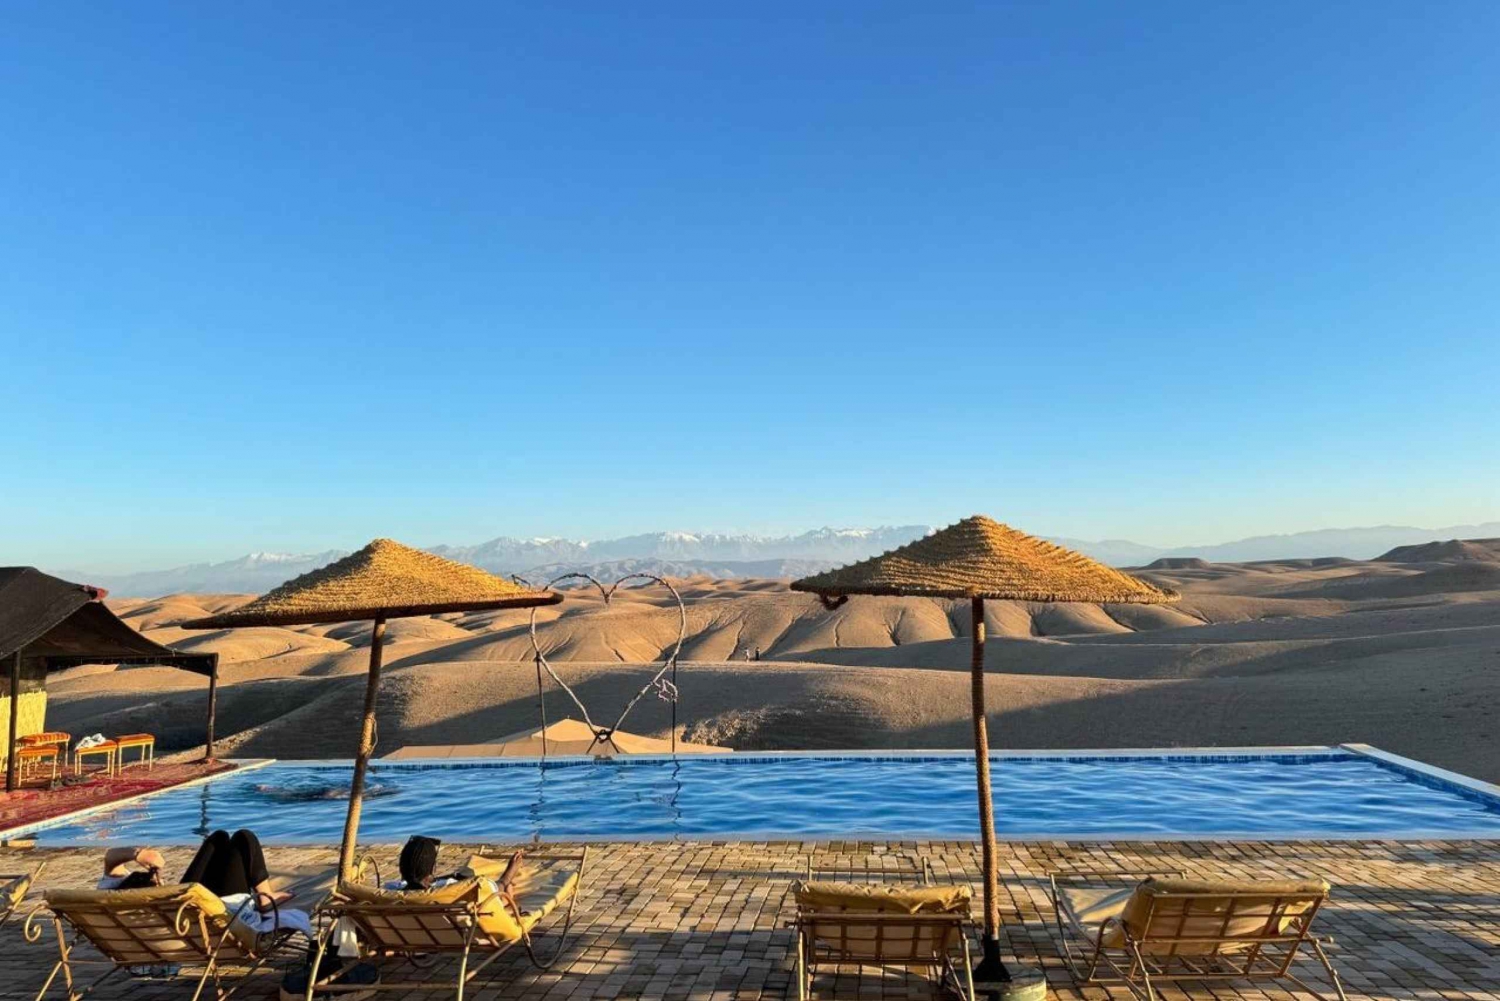 Marrakech: Agafay Desert Quad, Camel or Pool Day with Lunch: Agafay Desert Quad, Camel or Pool Day with Lunch